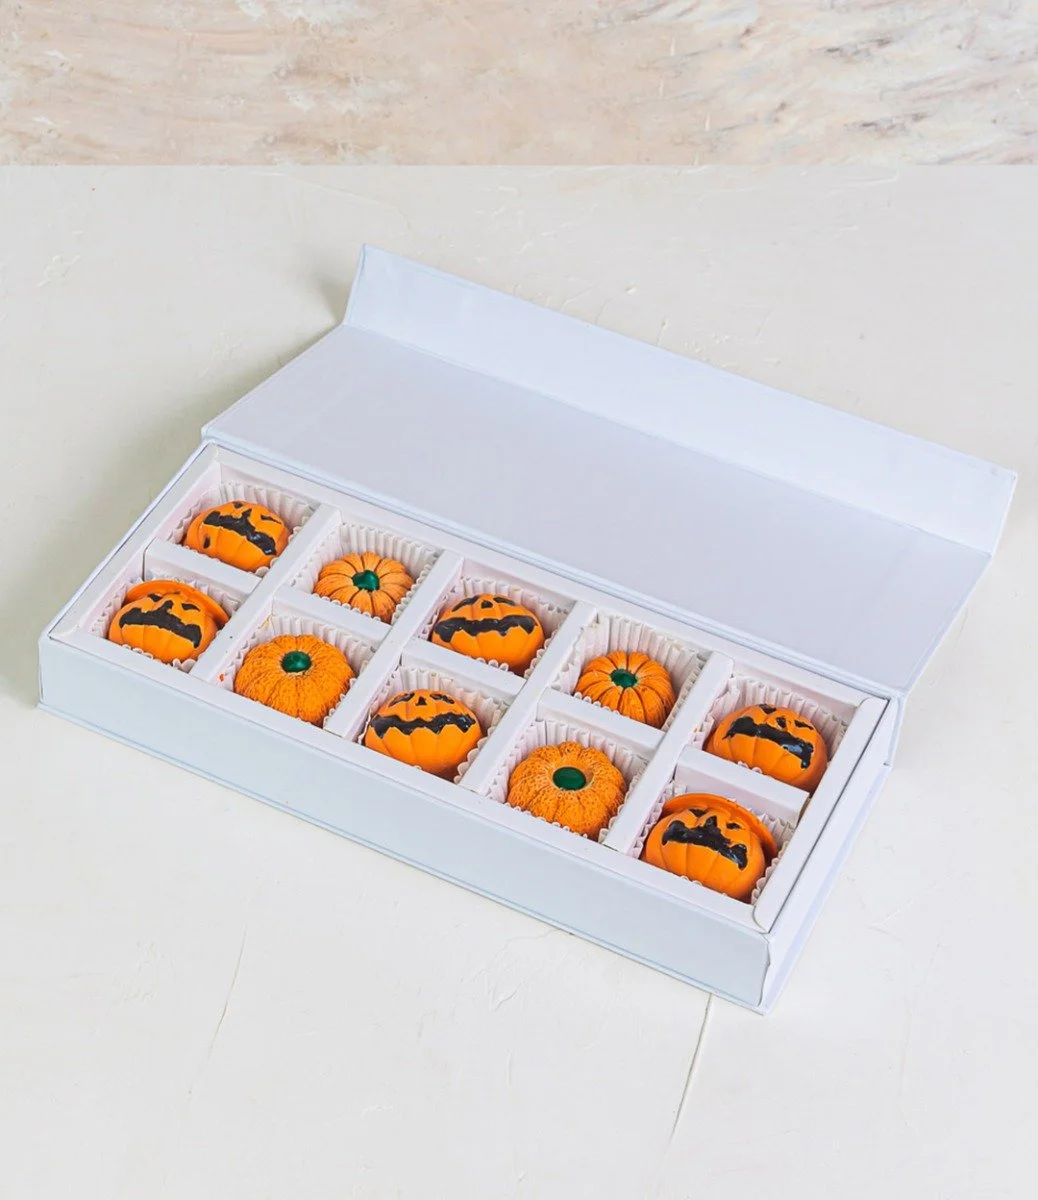 Mini Pumpkin Patch by NJD